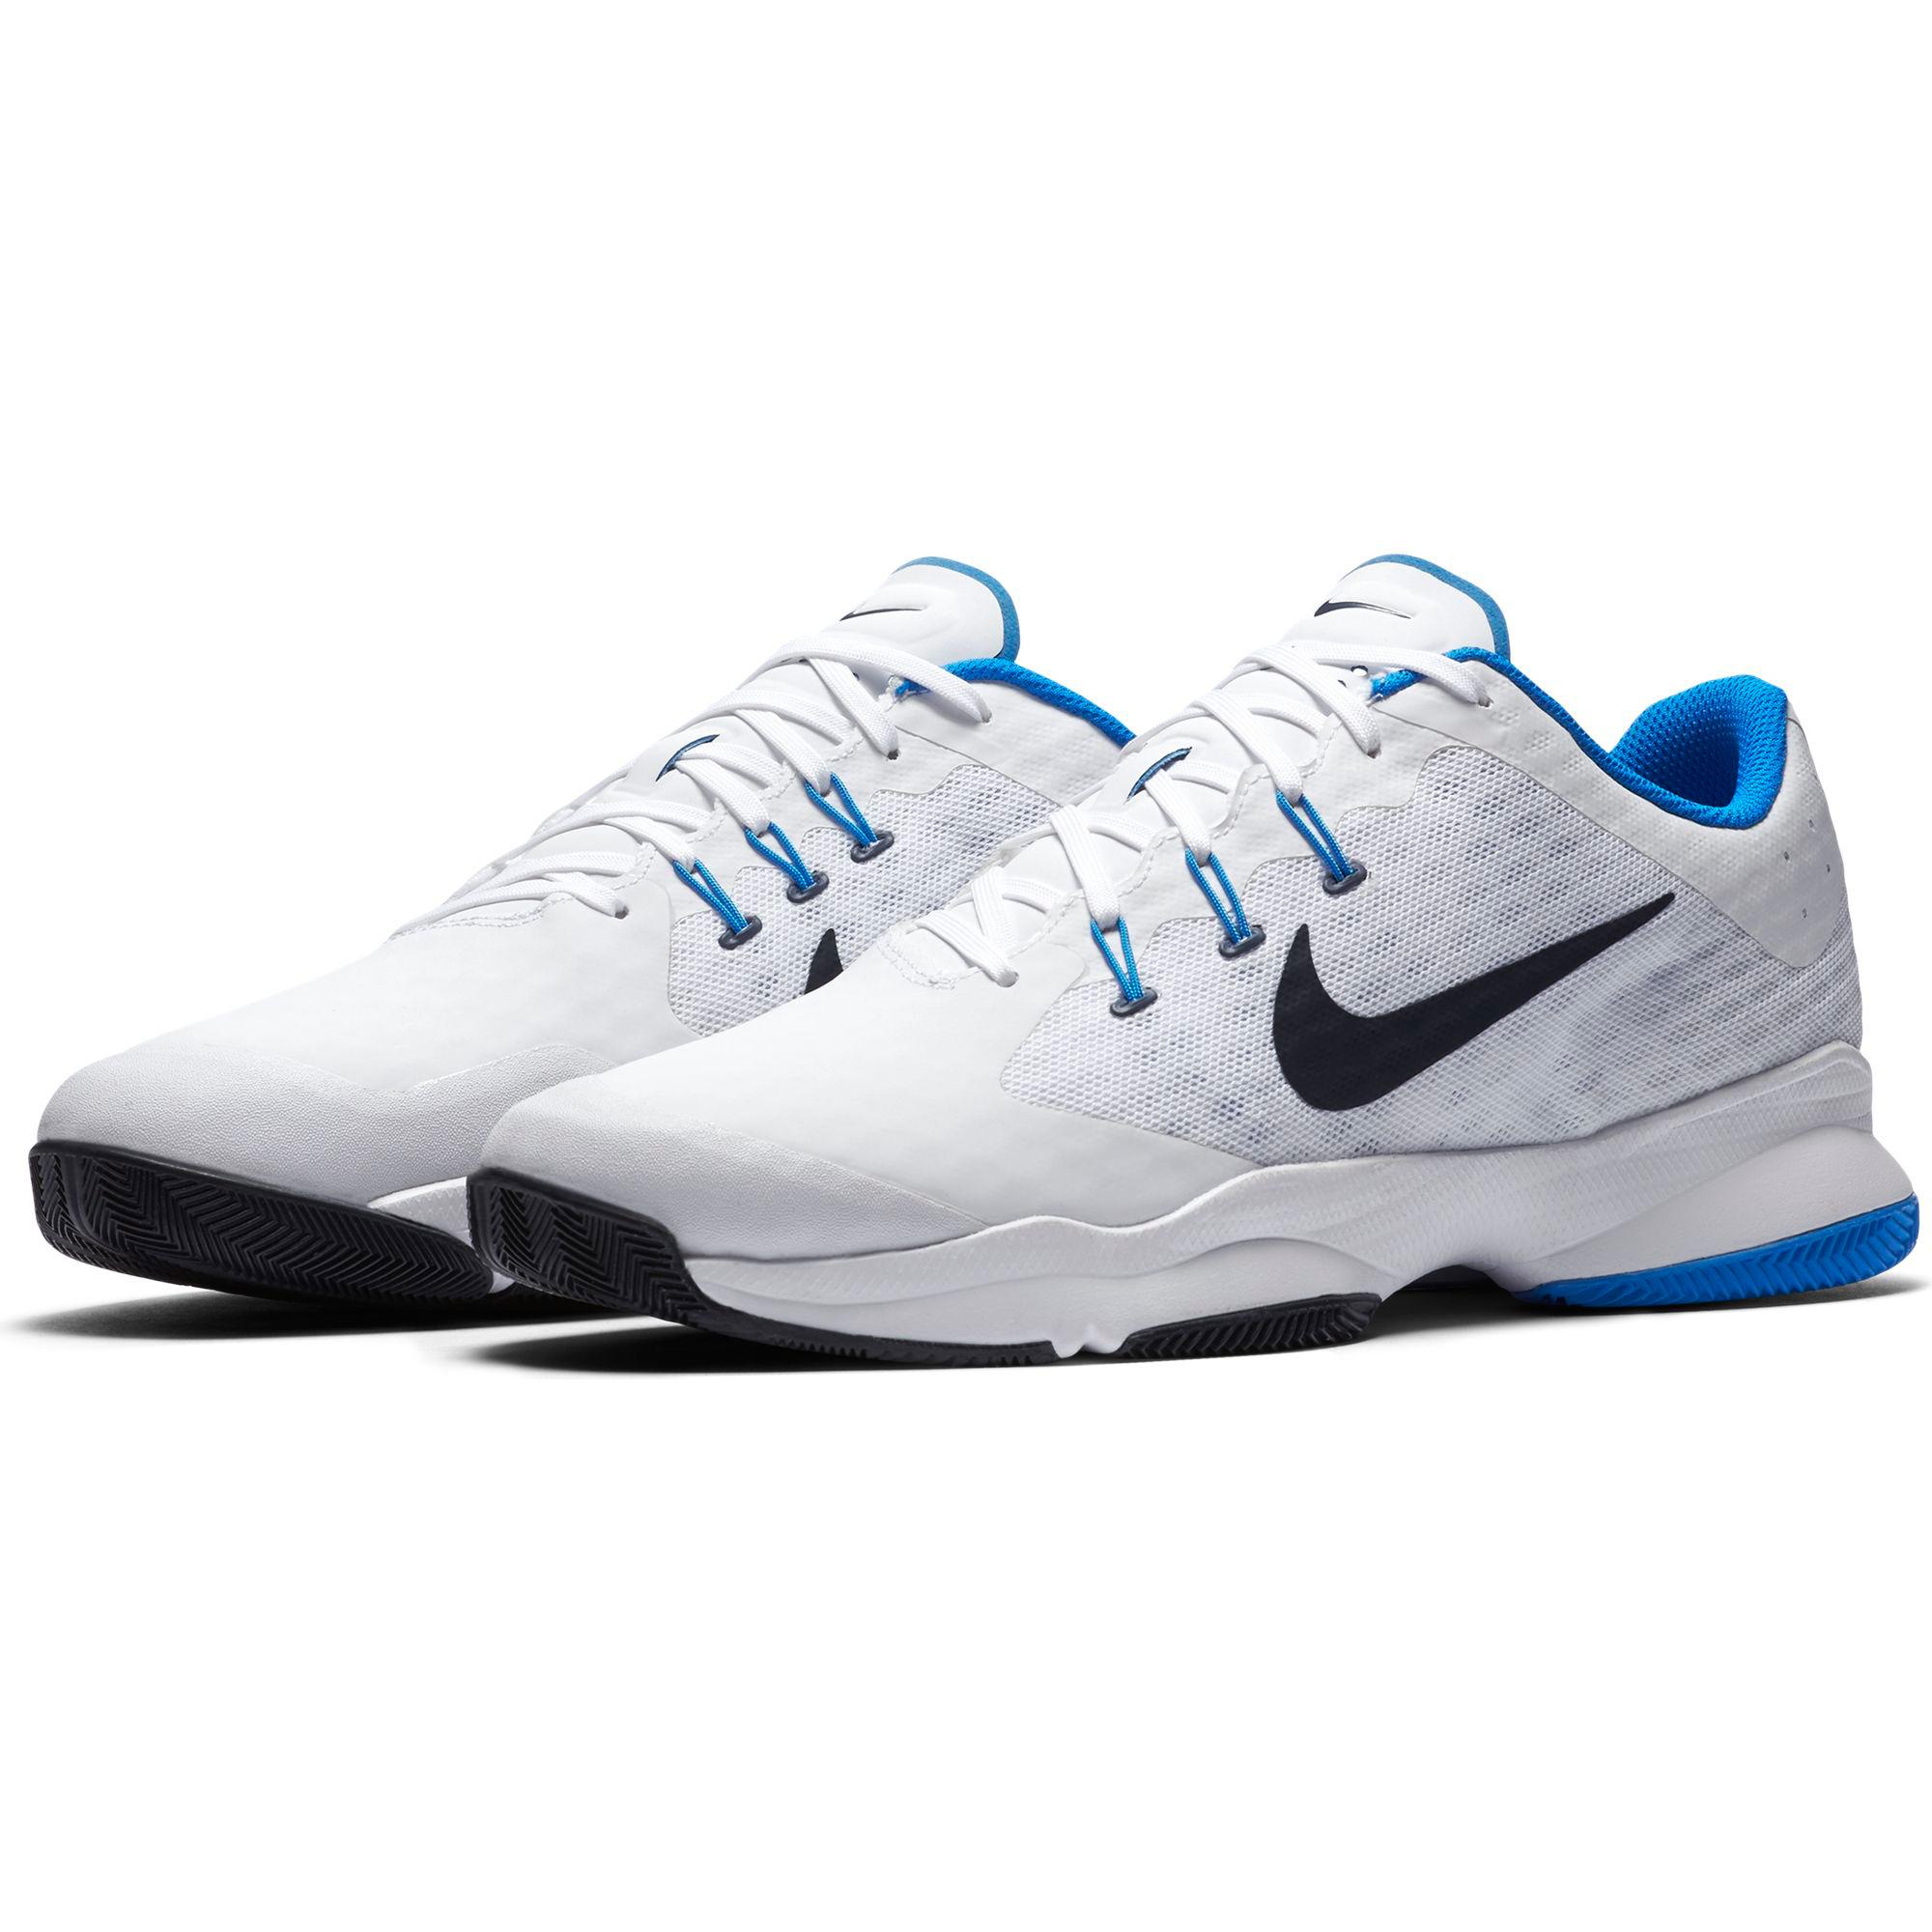 Nike Mens Air Zoom Ultra Tennis Shoes - White/Blue - Tennisnuts.com